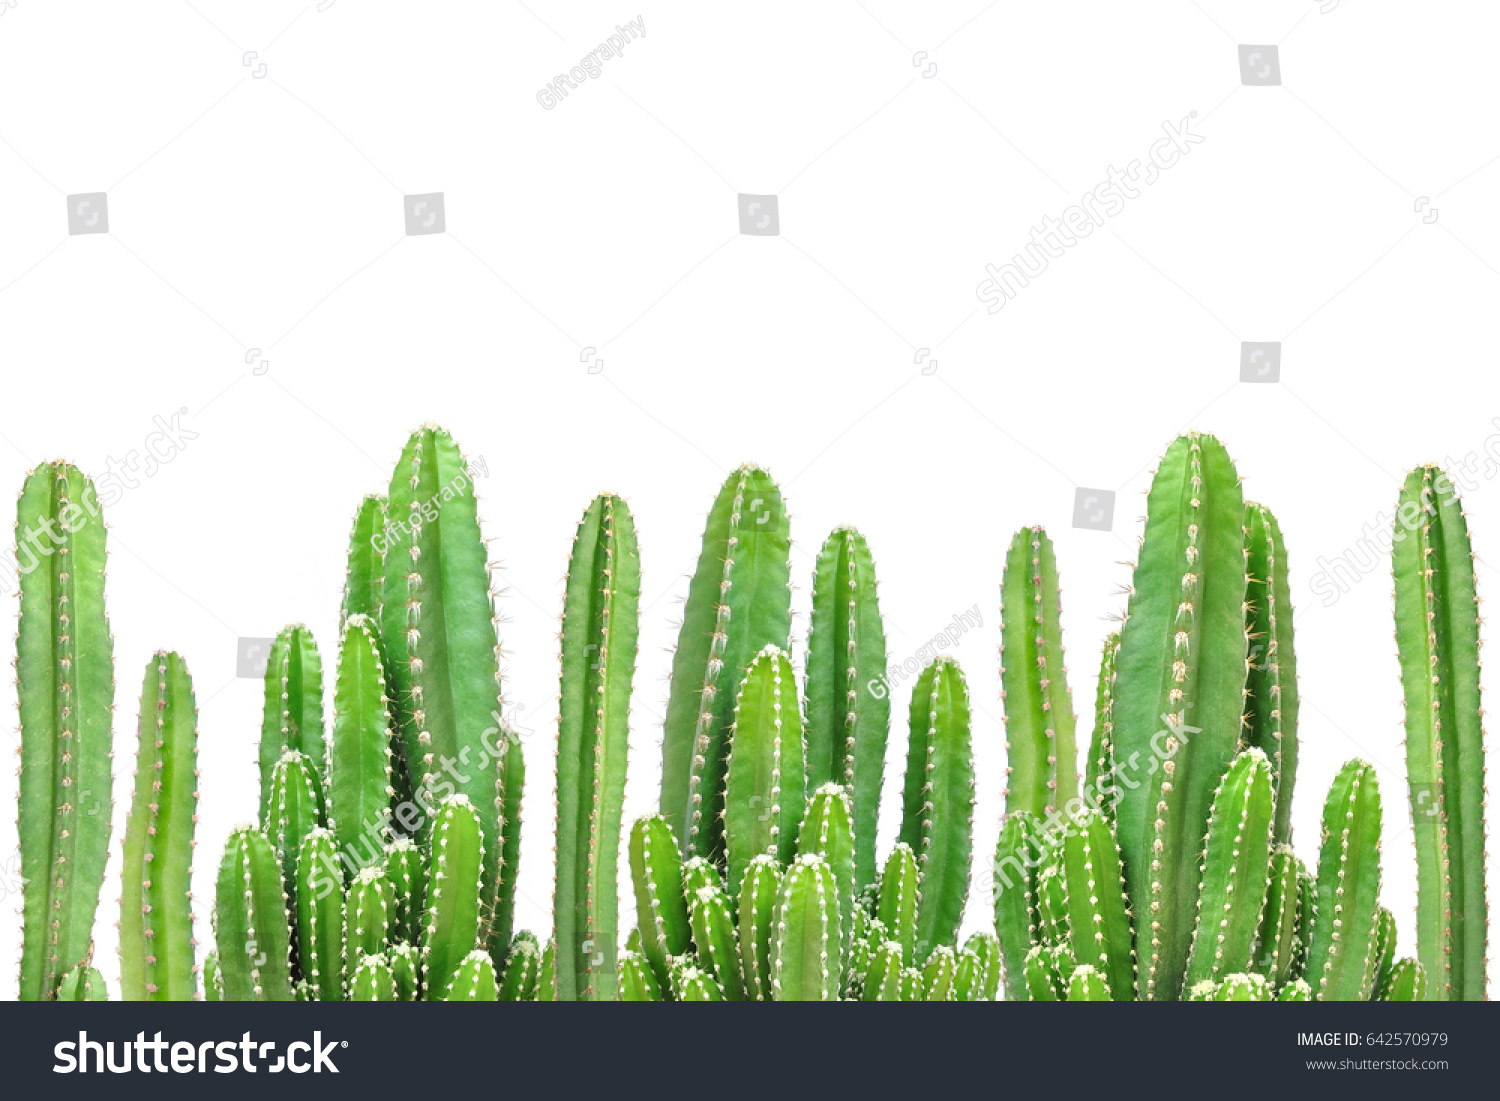 Cactus on isolated background. #642570979